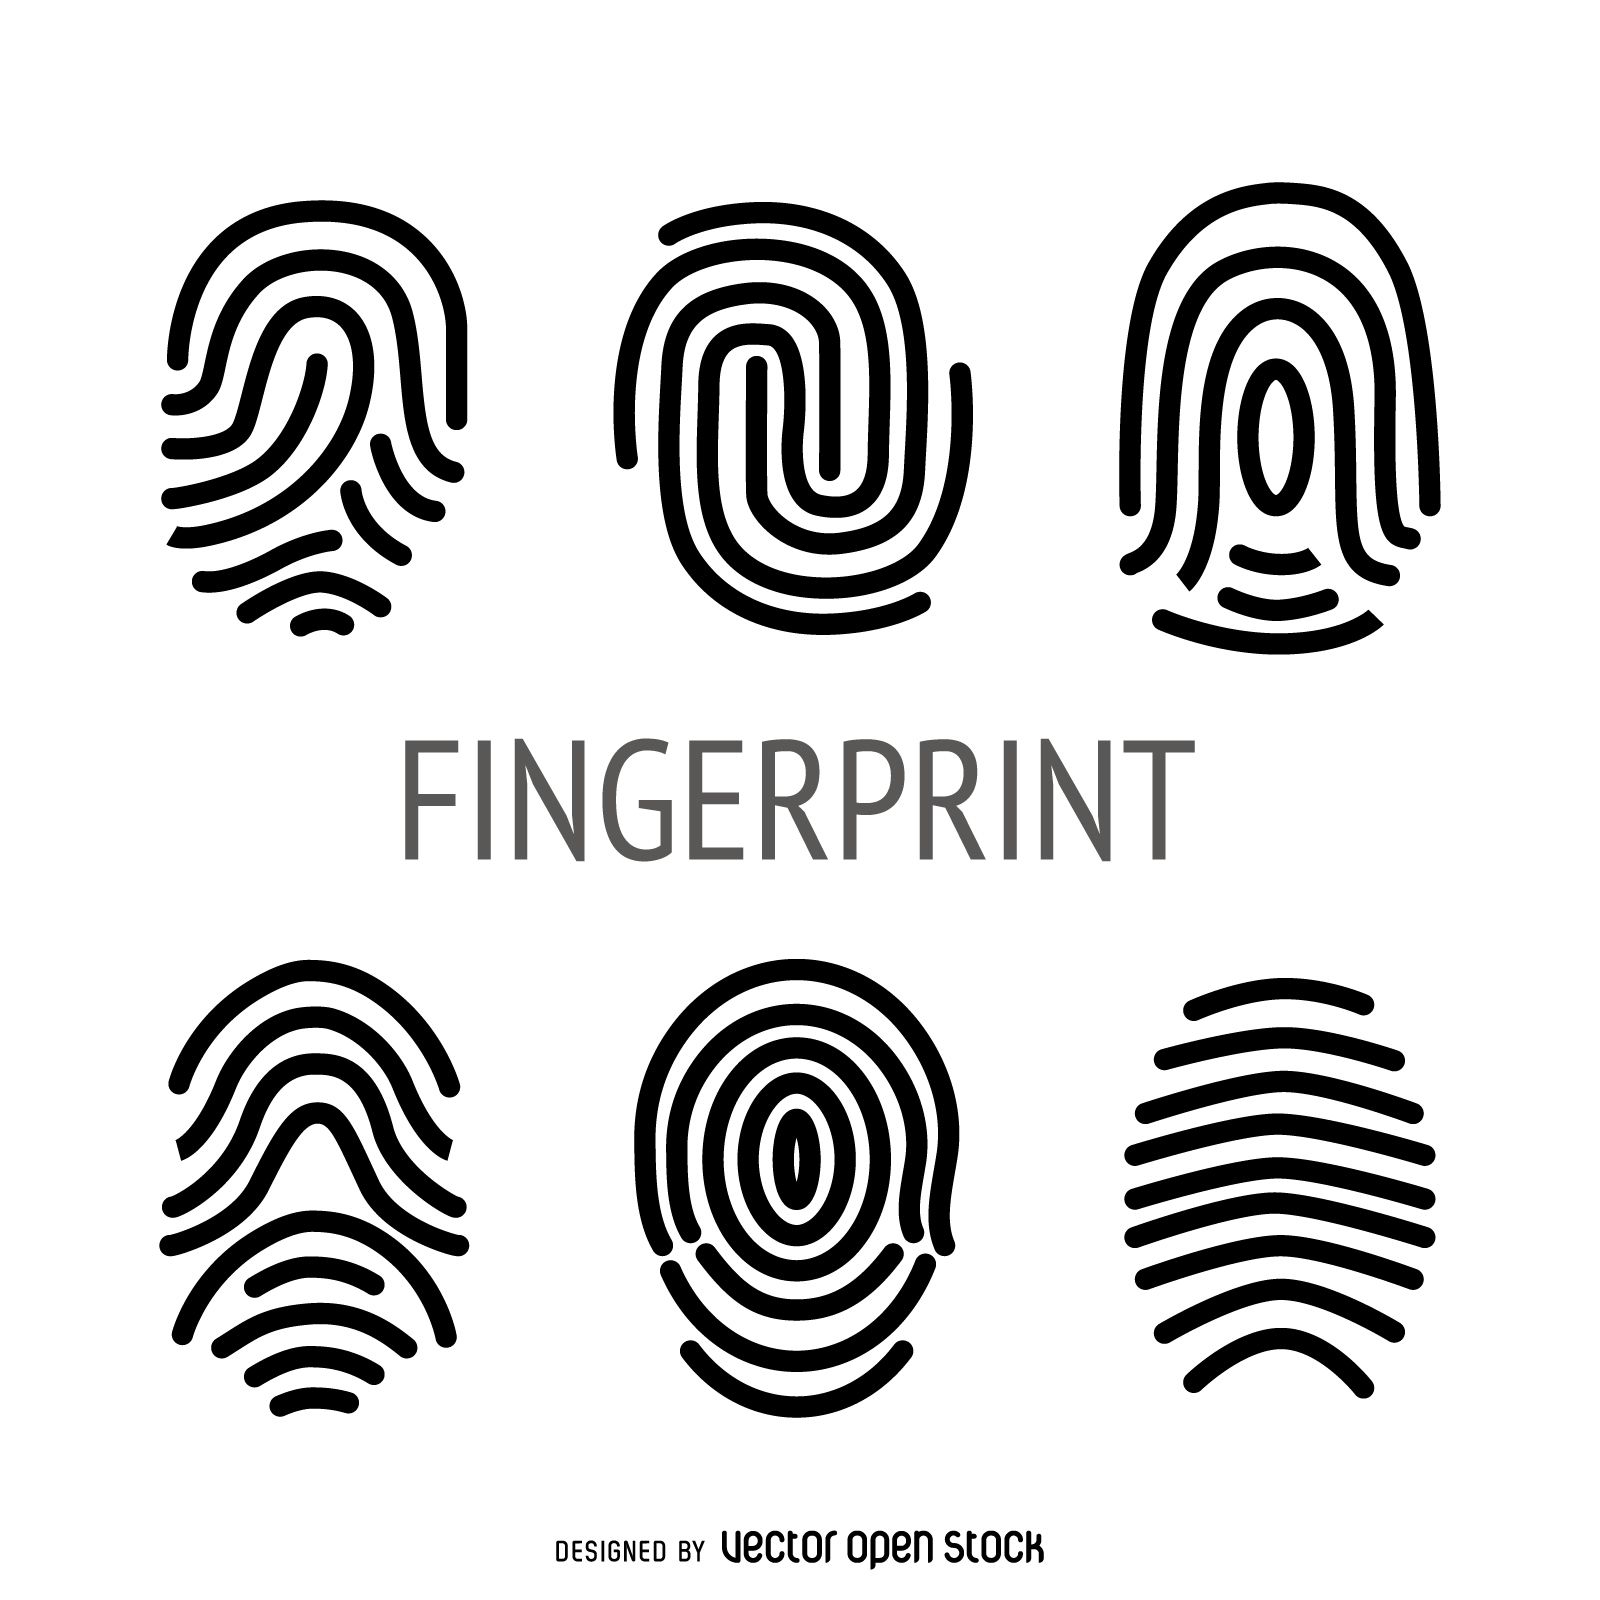 Flat fingerprint illustration collection